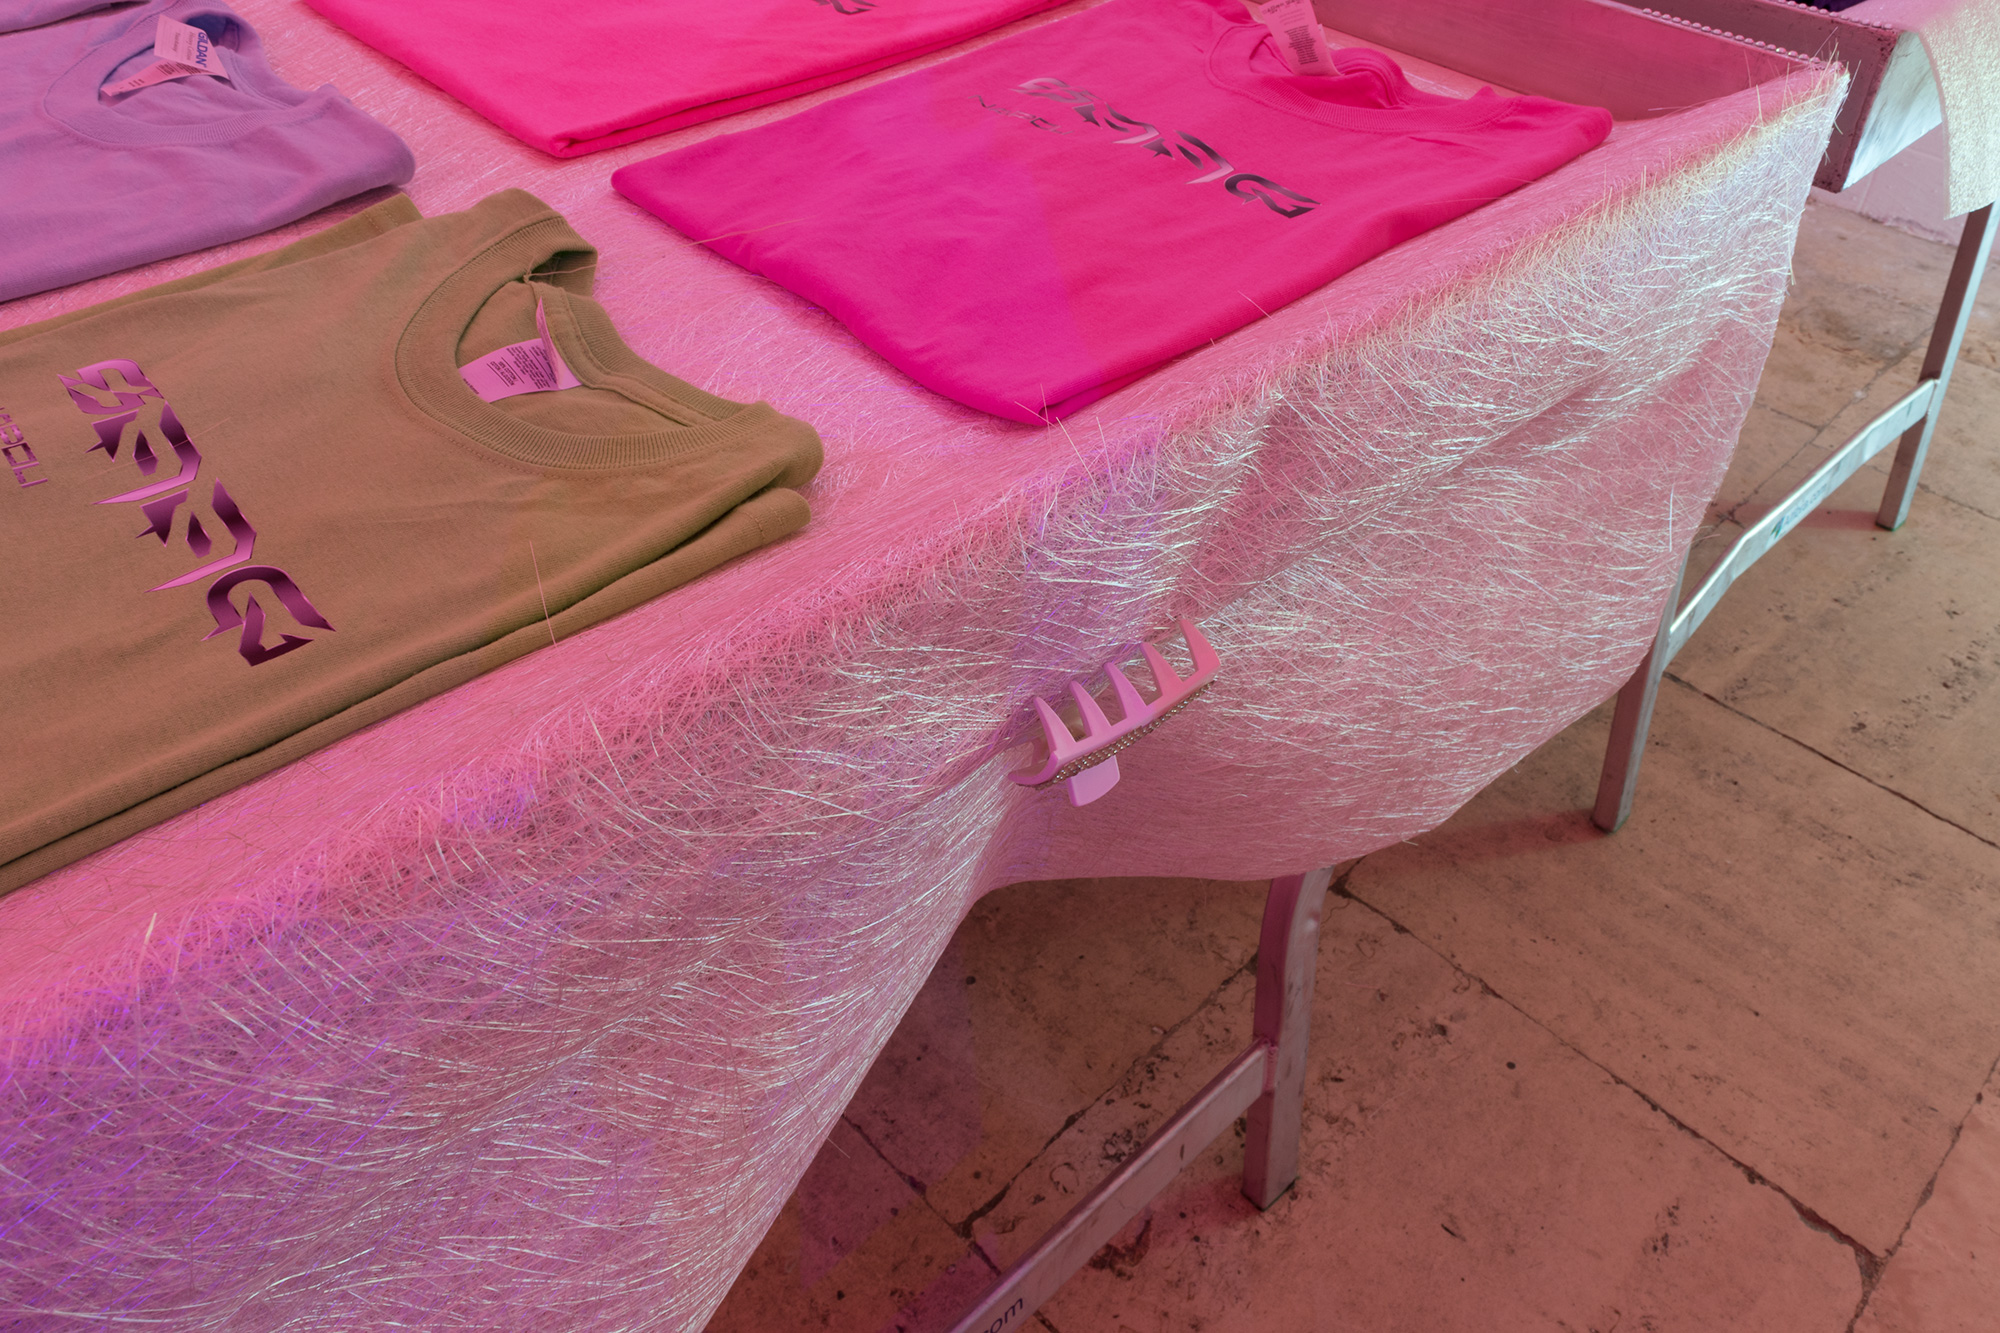 SAGG Napoli, ‘E cos favz s’appicn - Fake things are flamable, 2018  - Clothing stall, fake and original SAGG NAPOLI T-Shirts, lights, self adhesive fake crystals, hair clips, screwdriver. Environmental dimensions. (Detail)